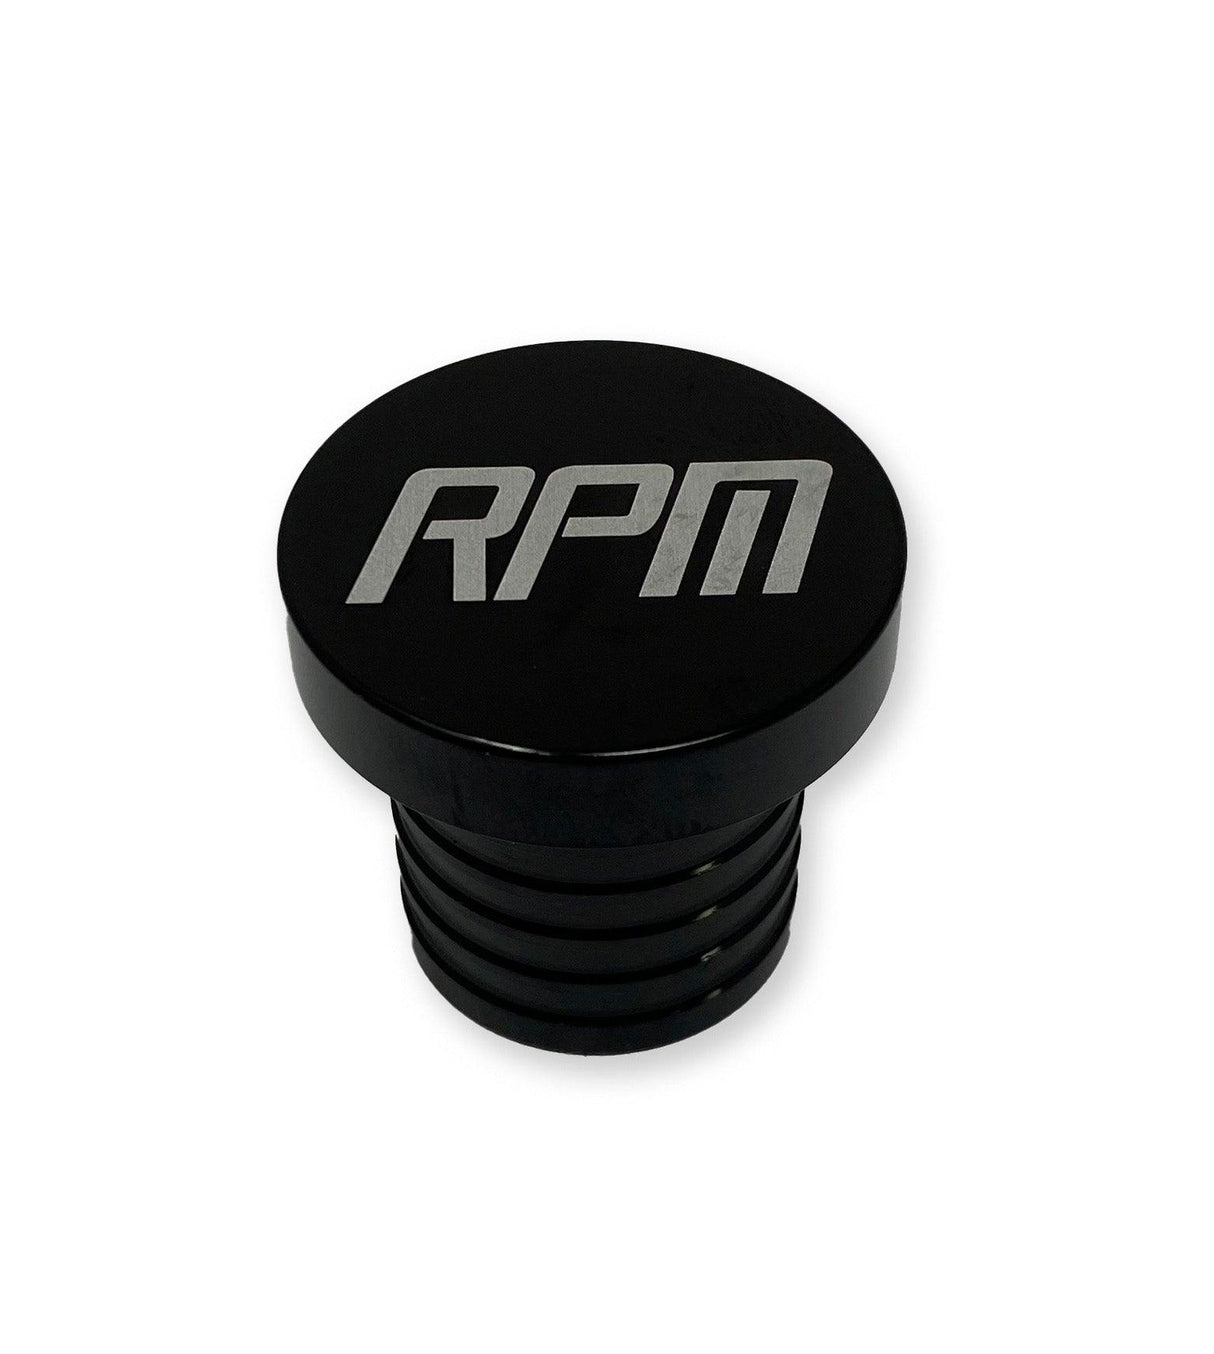 RPM-SxS Can Am X3 BOV Kit - R1 Industries